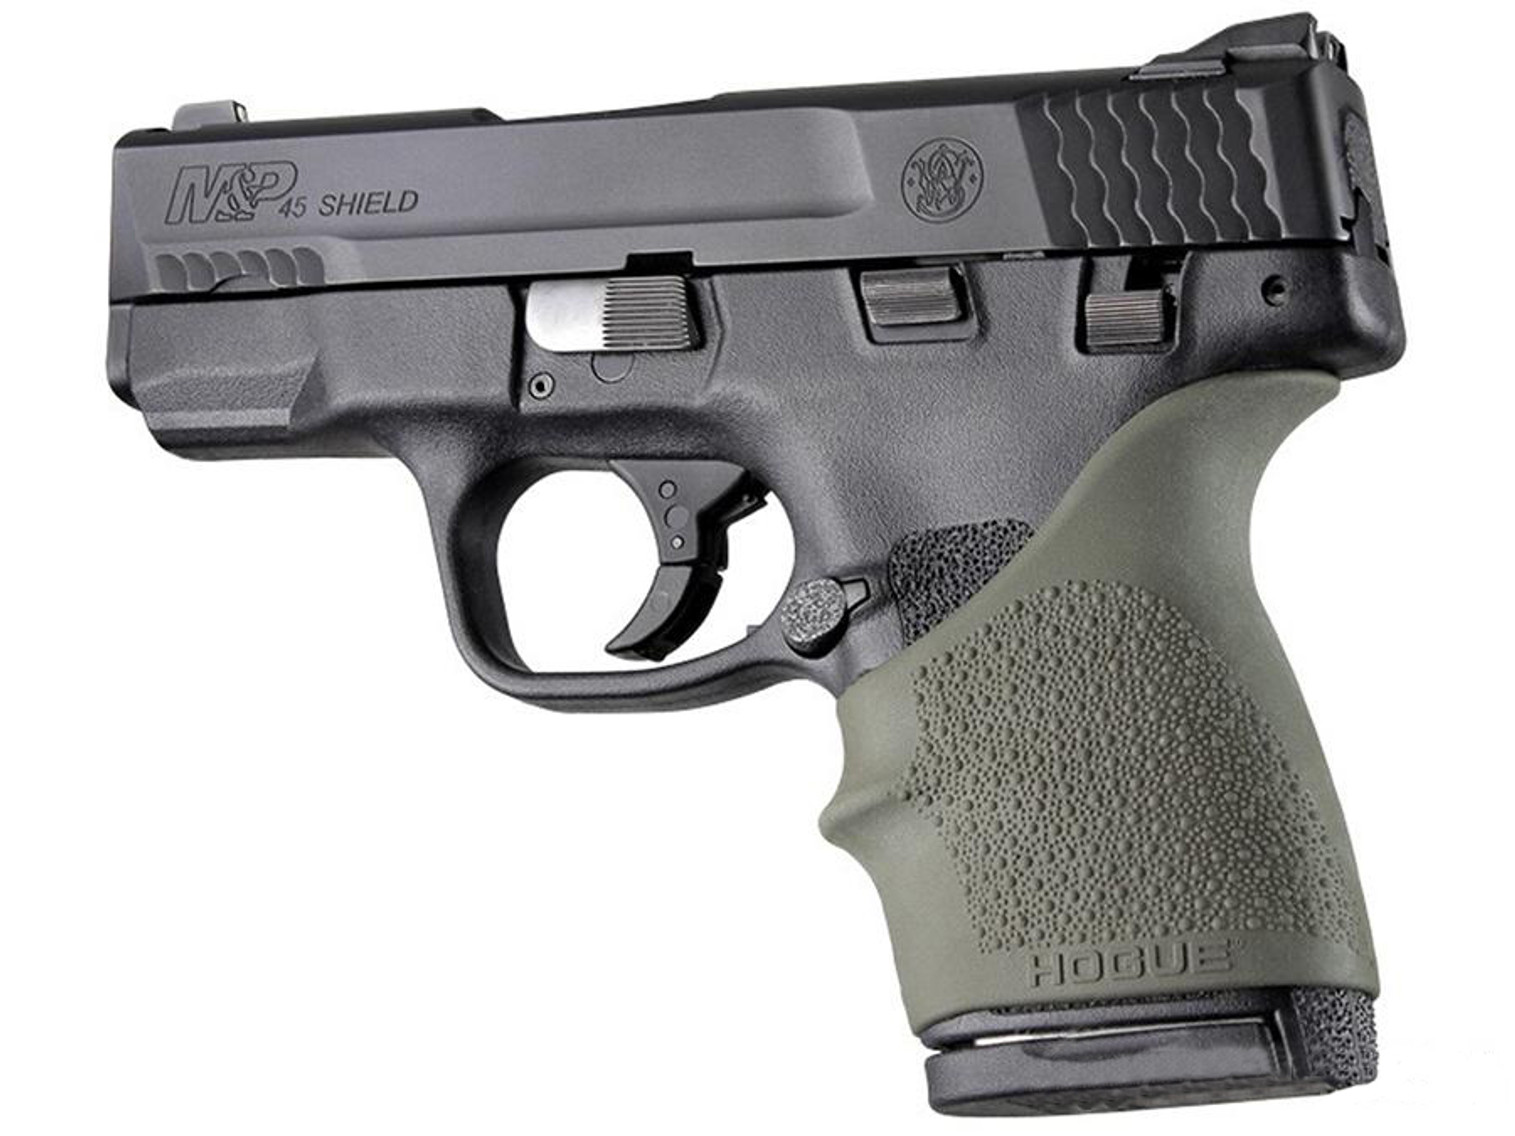 Hogue HandAll Beavertail Handgun Grip Sleeve (Color: Green / Model: S&W M&P Shield 45, Kahr P9/P40/CW9/CW40)